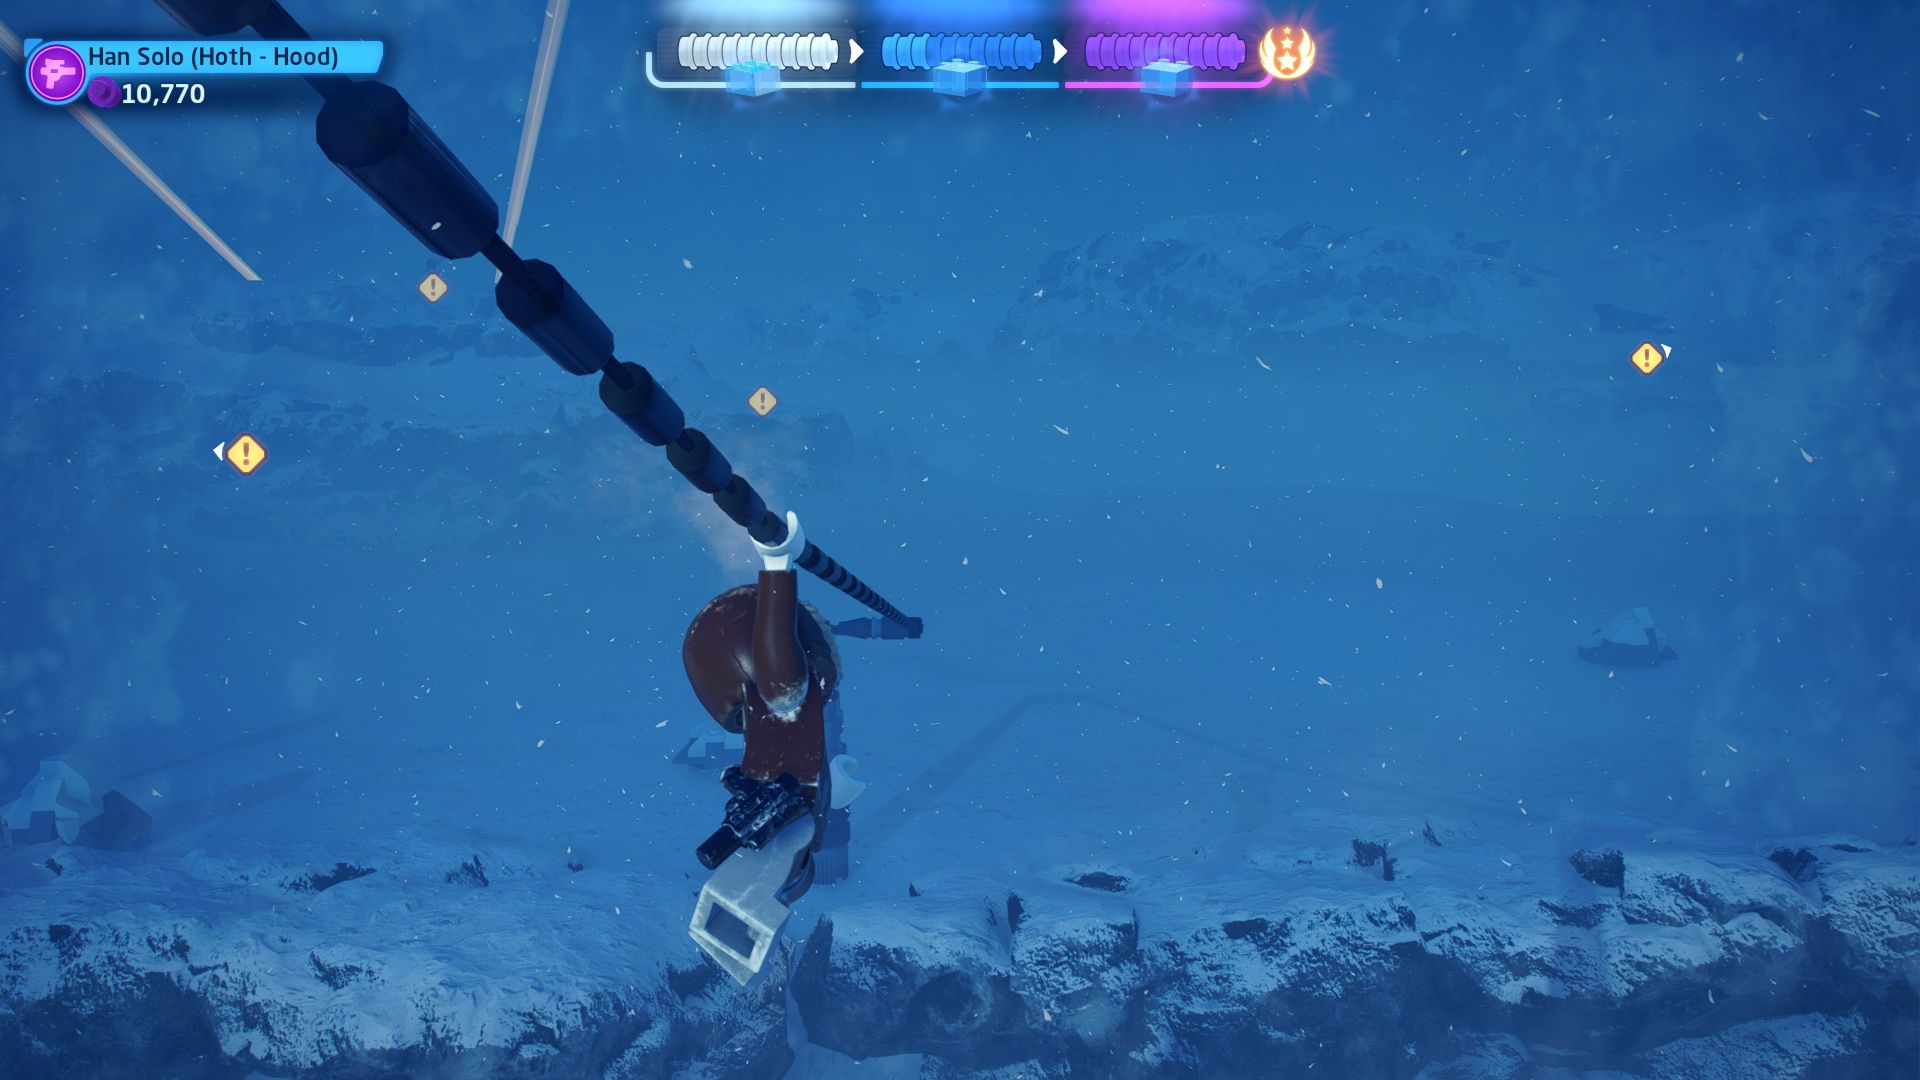 Han-Solo sliding down a zip line